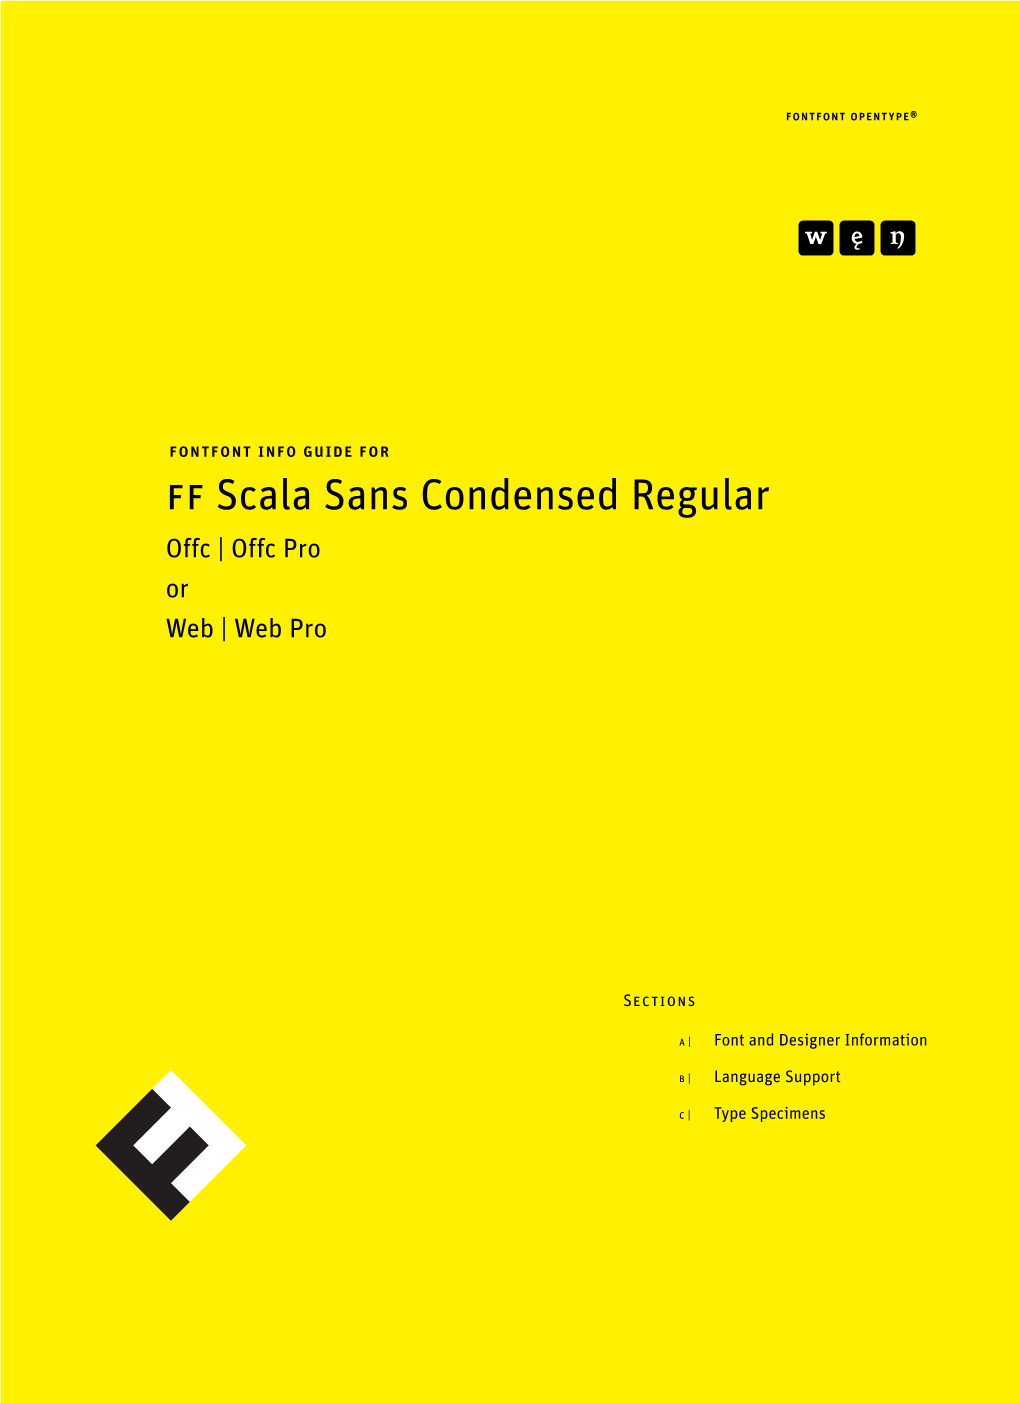 FSI: FF Scala Sans Offc Condensed Regular